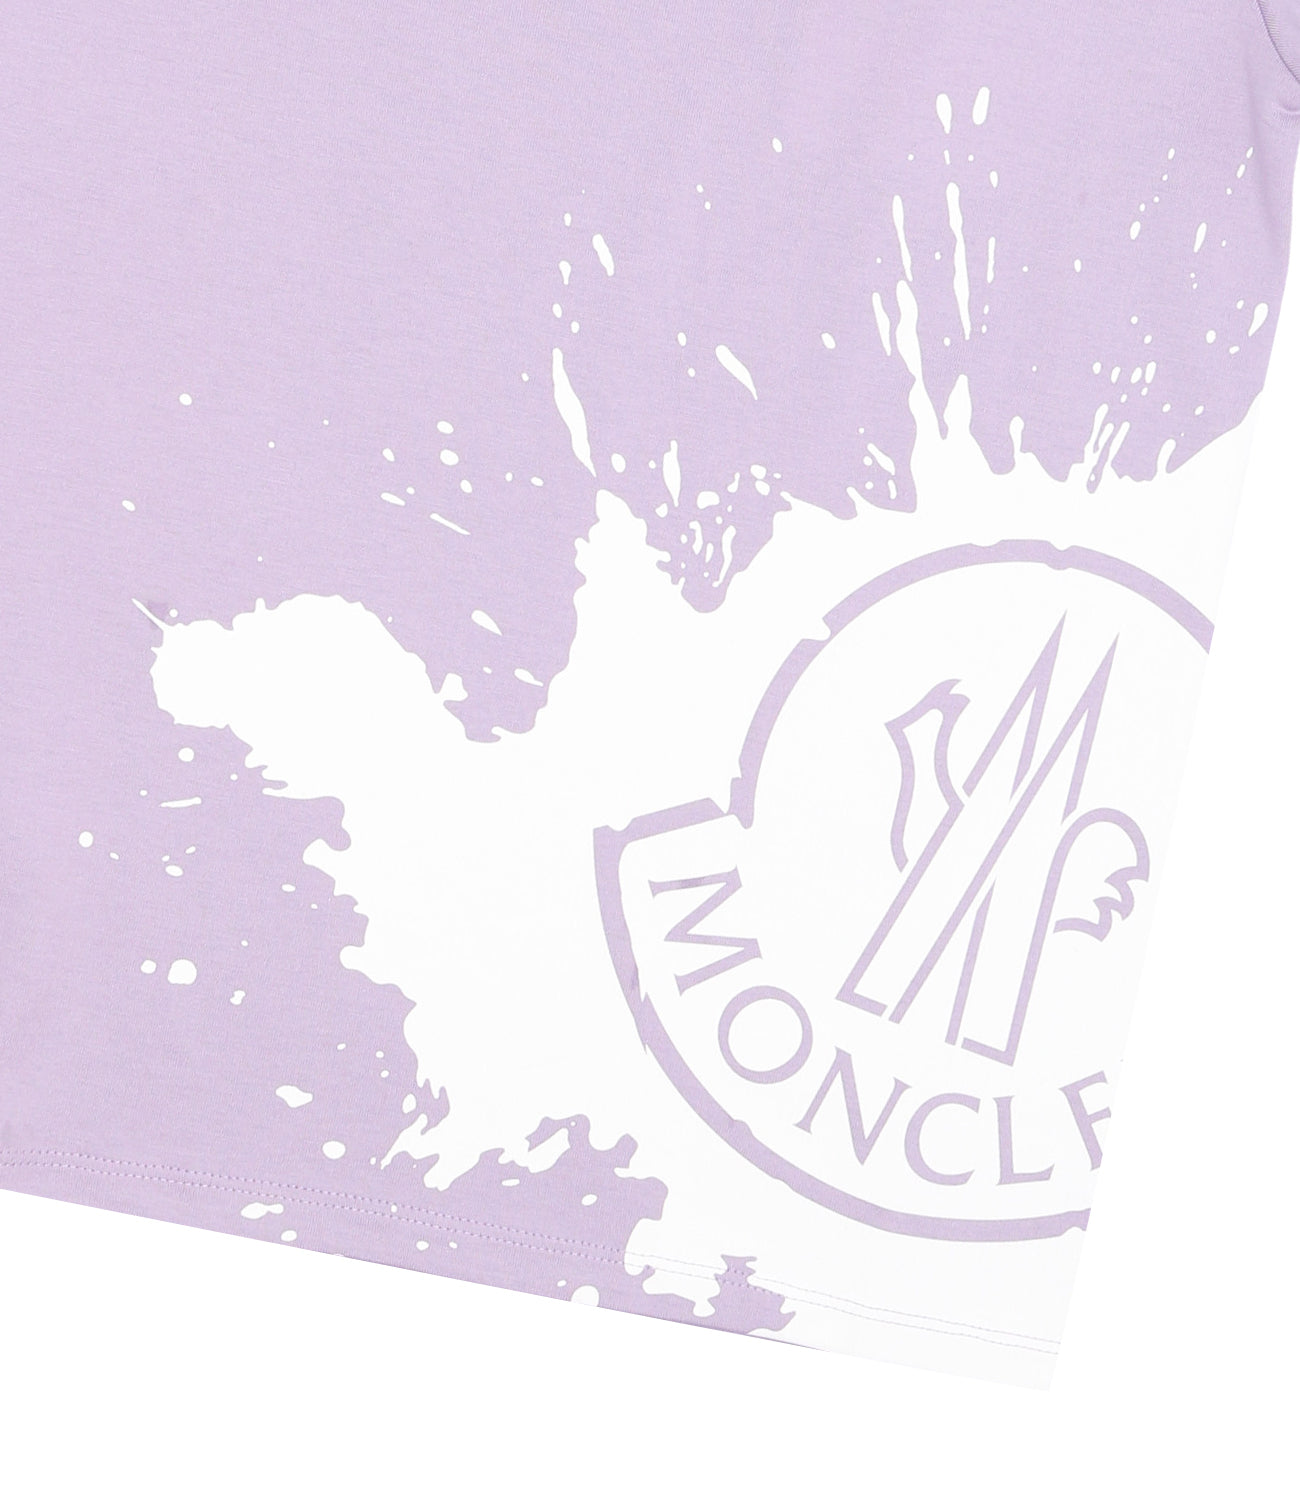 Moncler Junior | Lilac T-Shirt